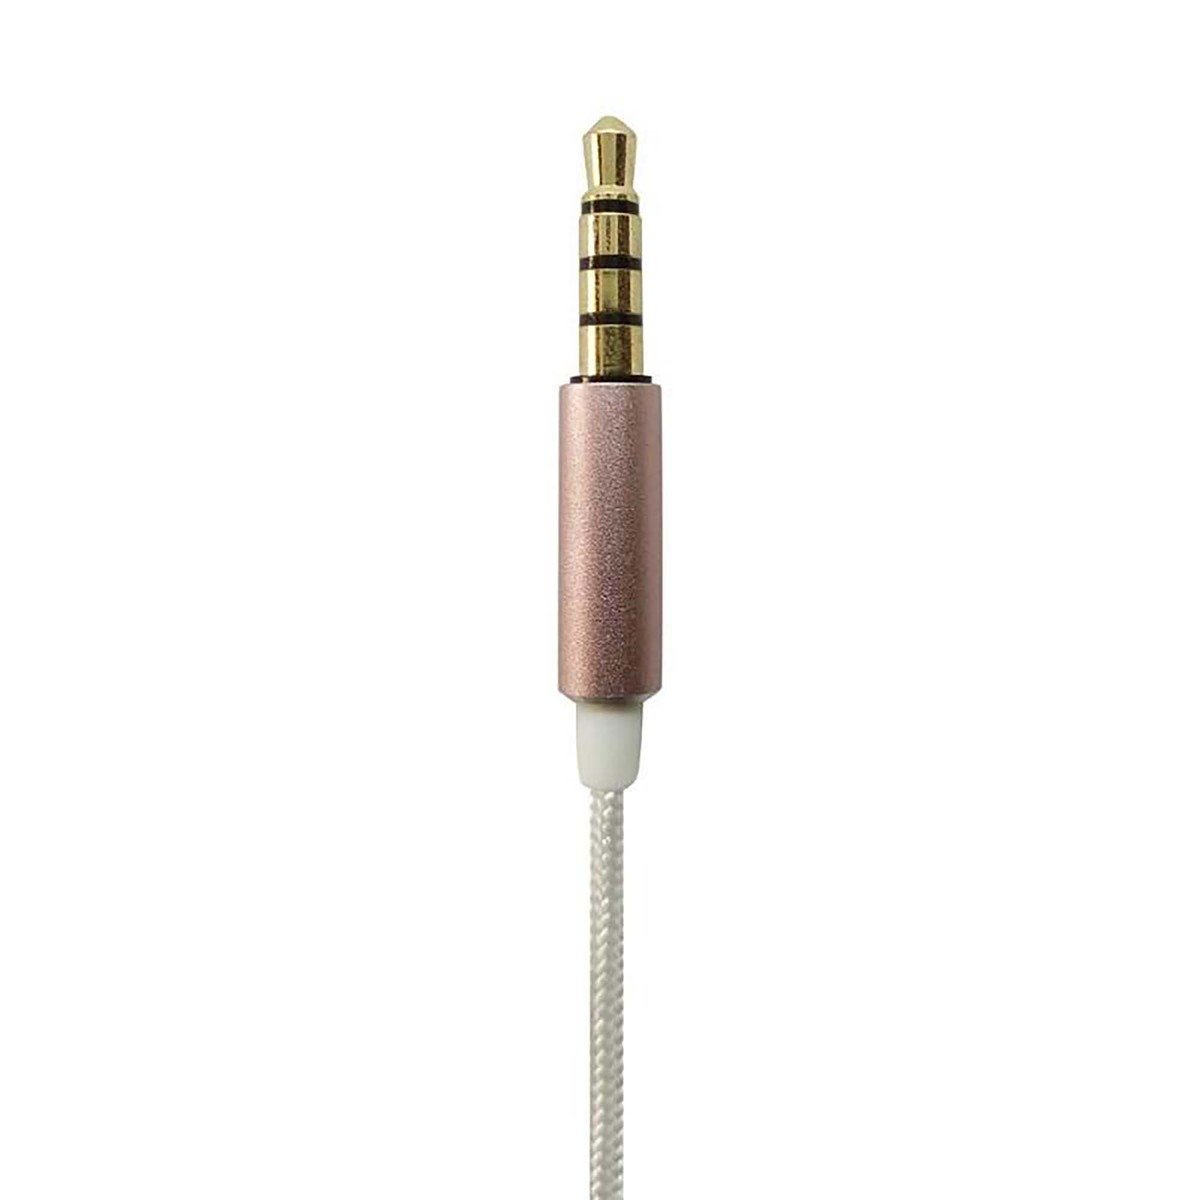 Anker SoundBuds Wired In-Ear Mono Earphone Rose Gold